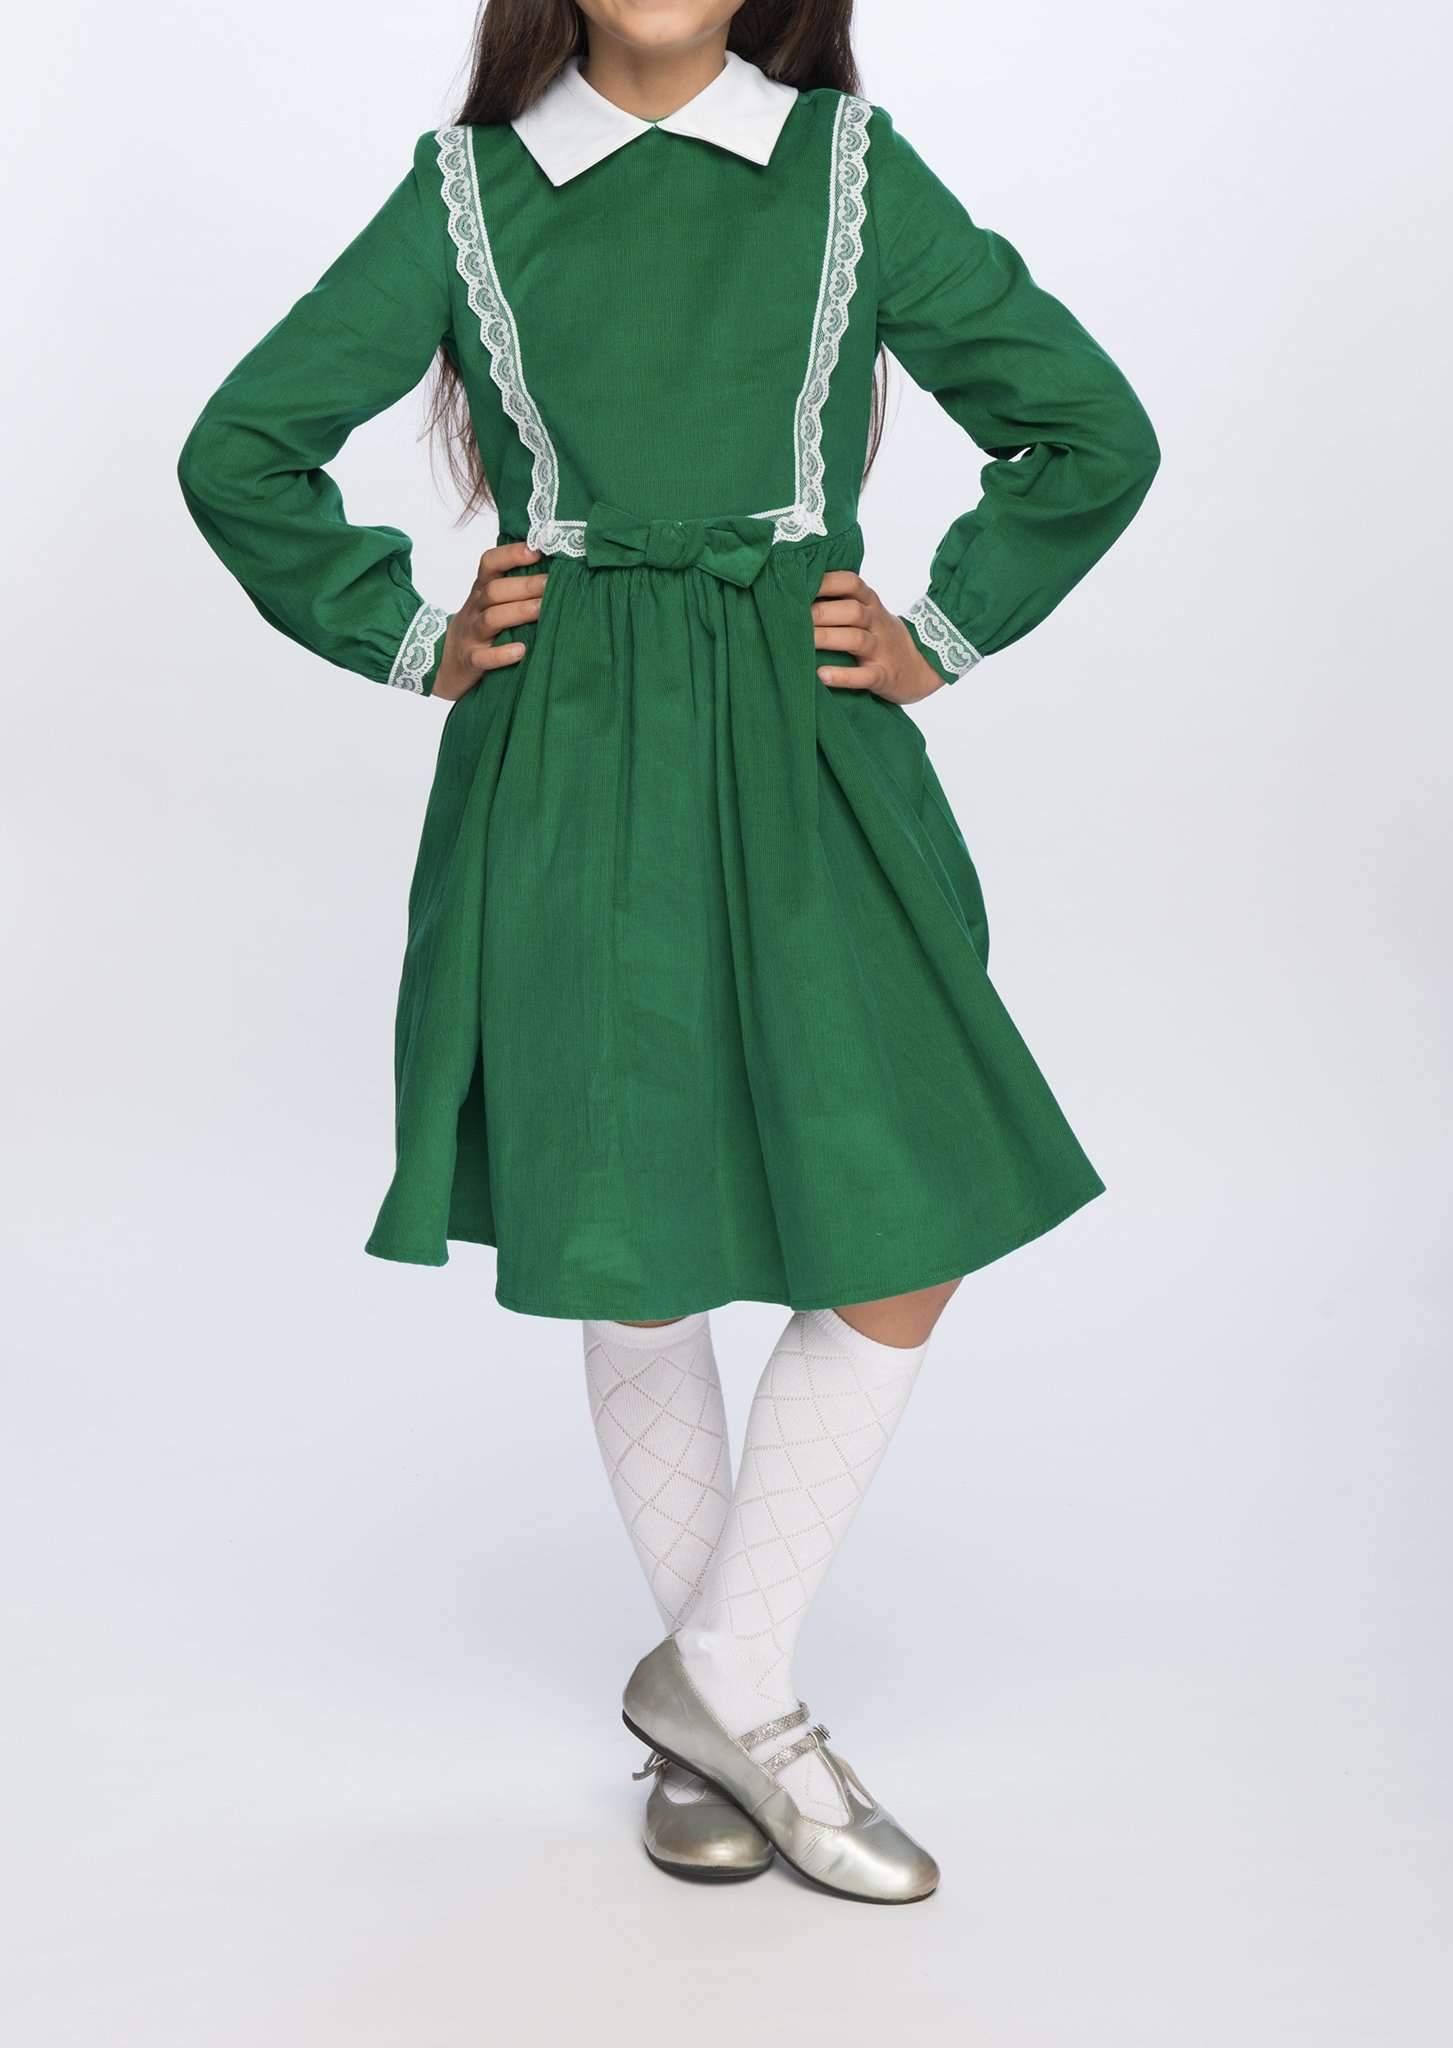 Girl modeling Green Dress by Classic Girl